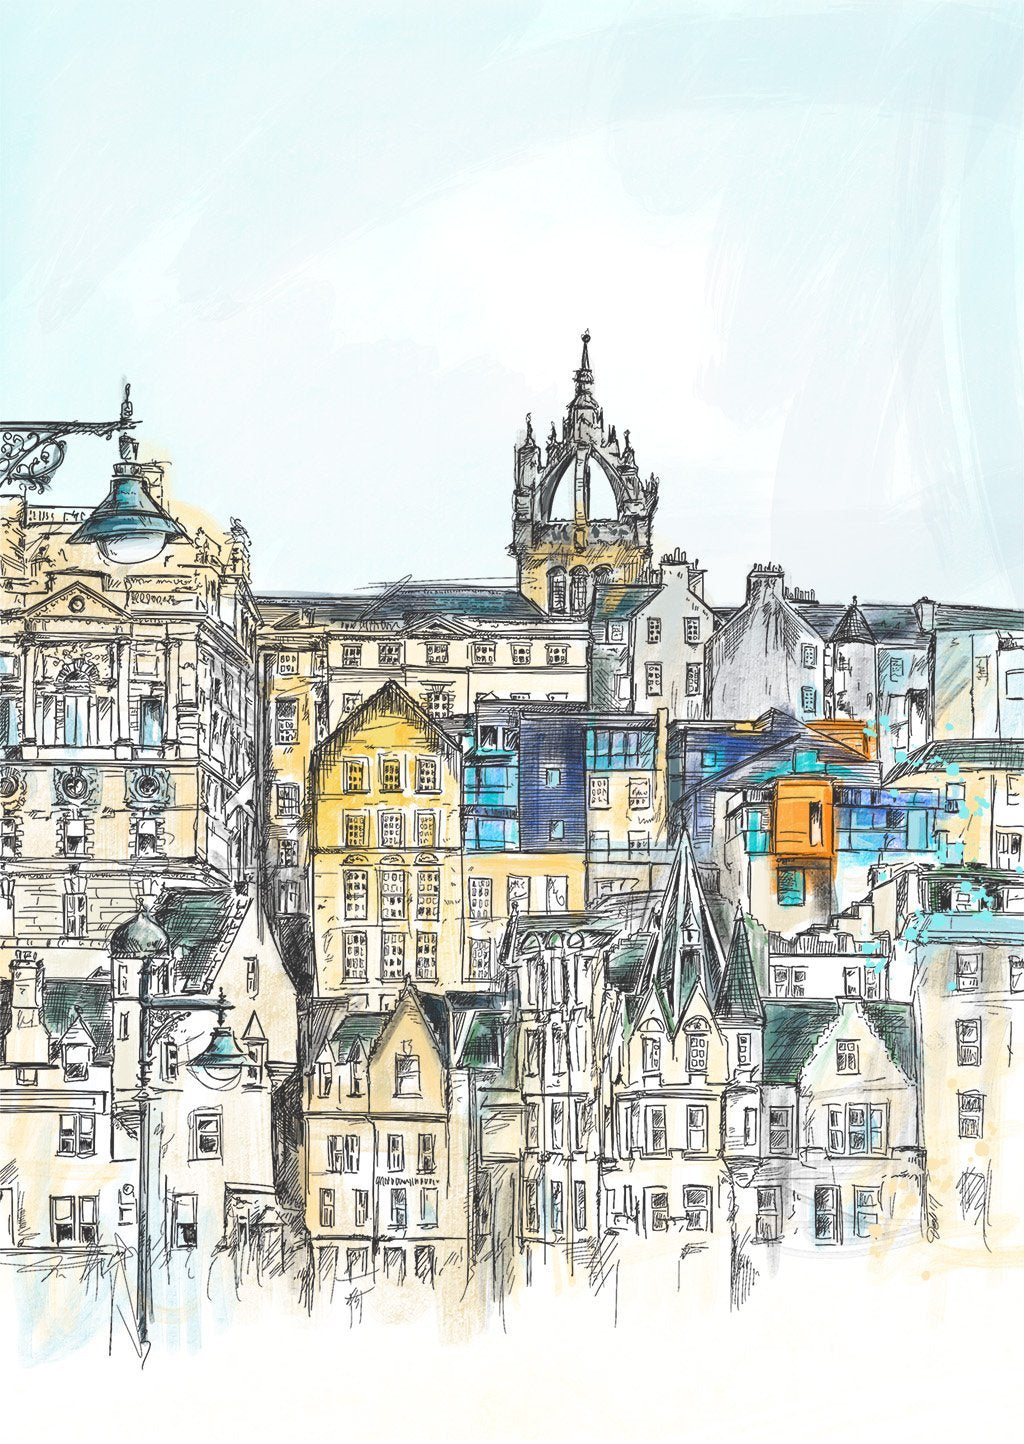 St Giles & Old Town Edinburgh Greeting Card